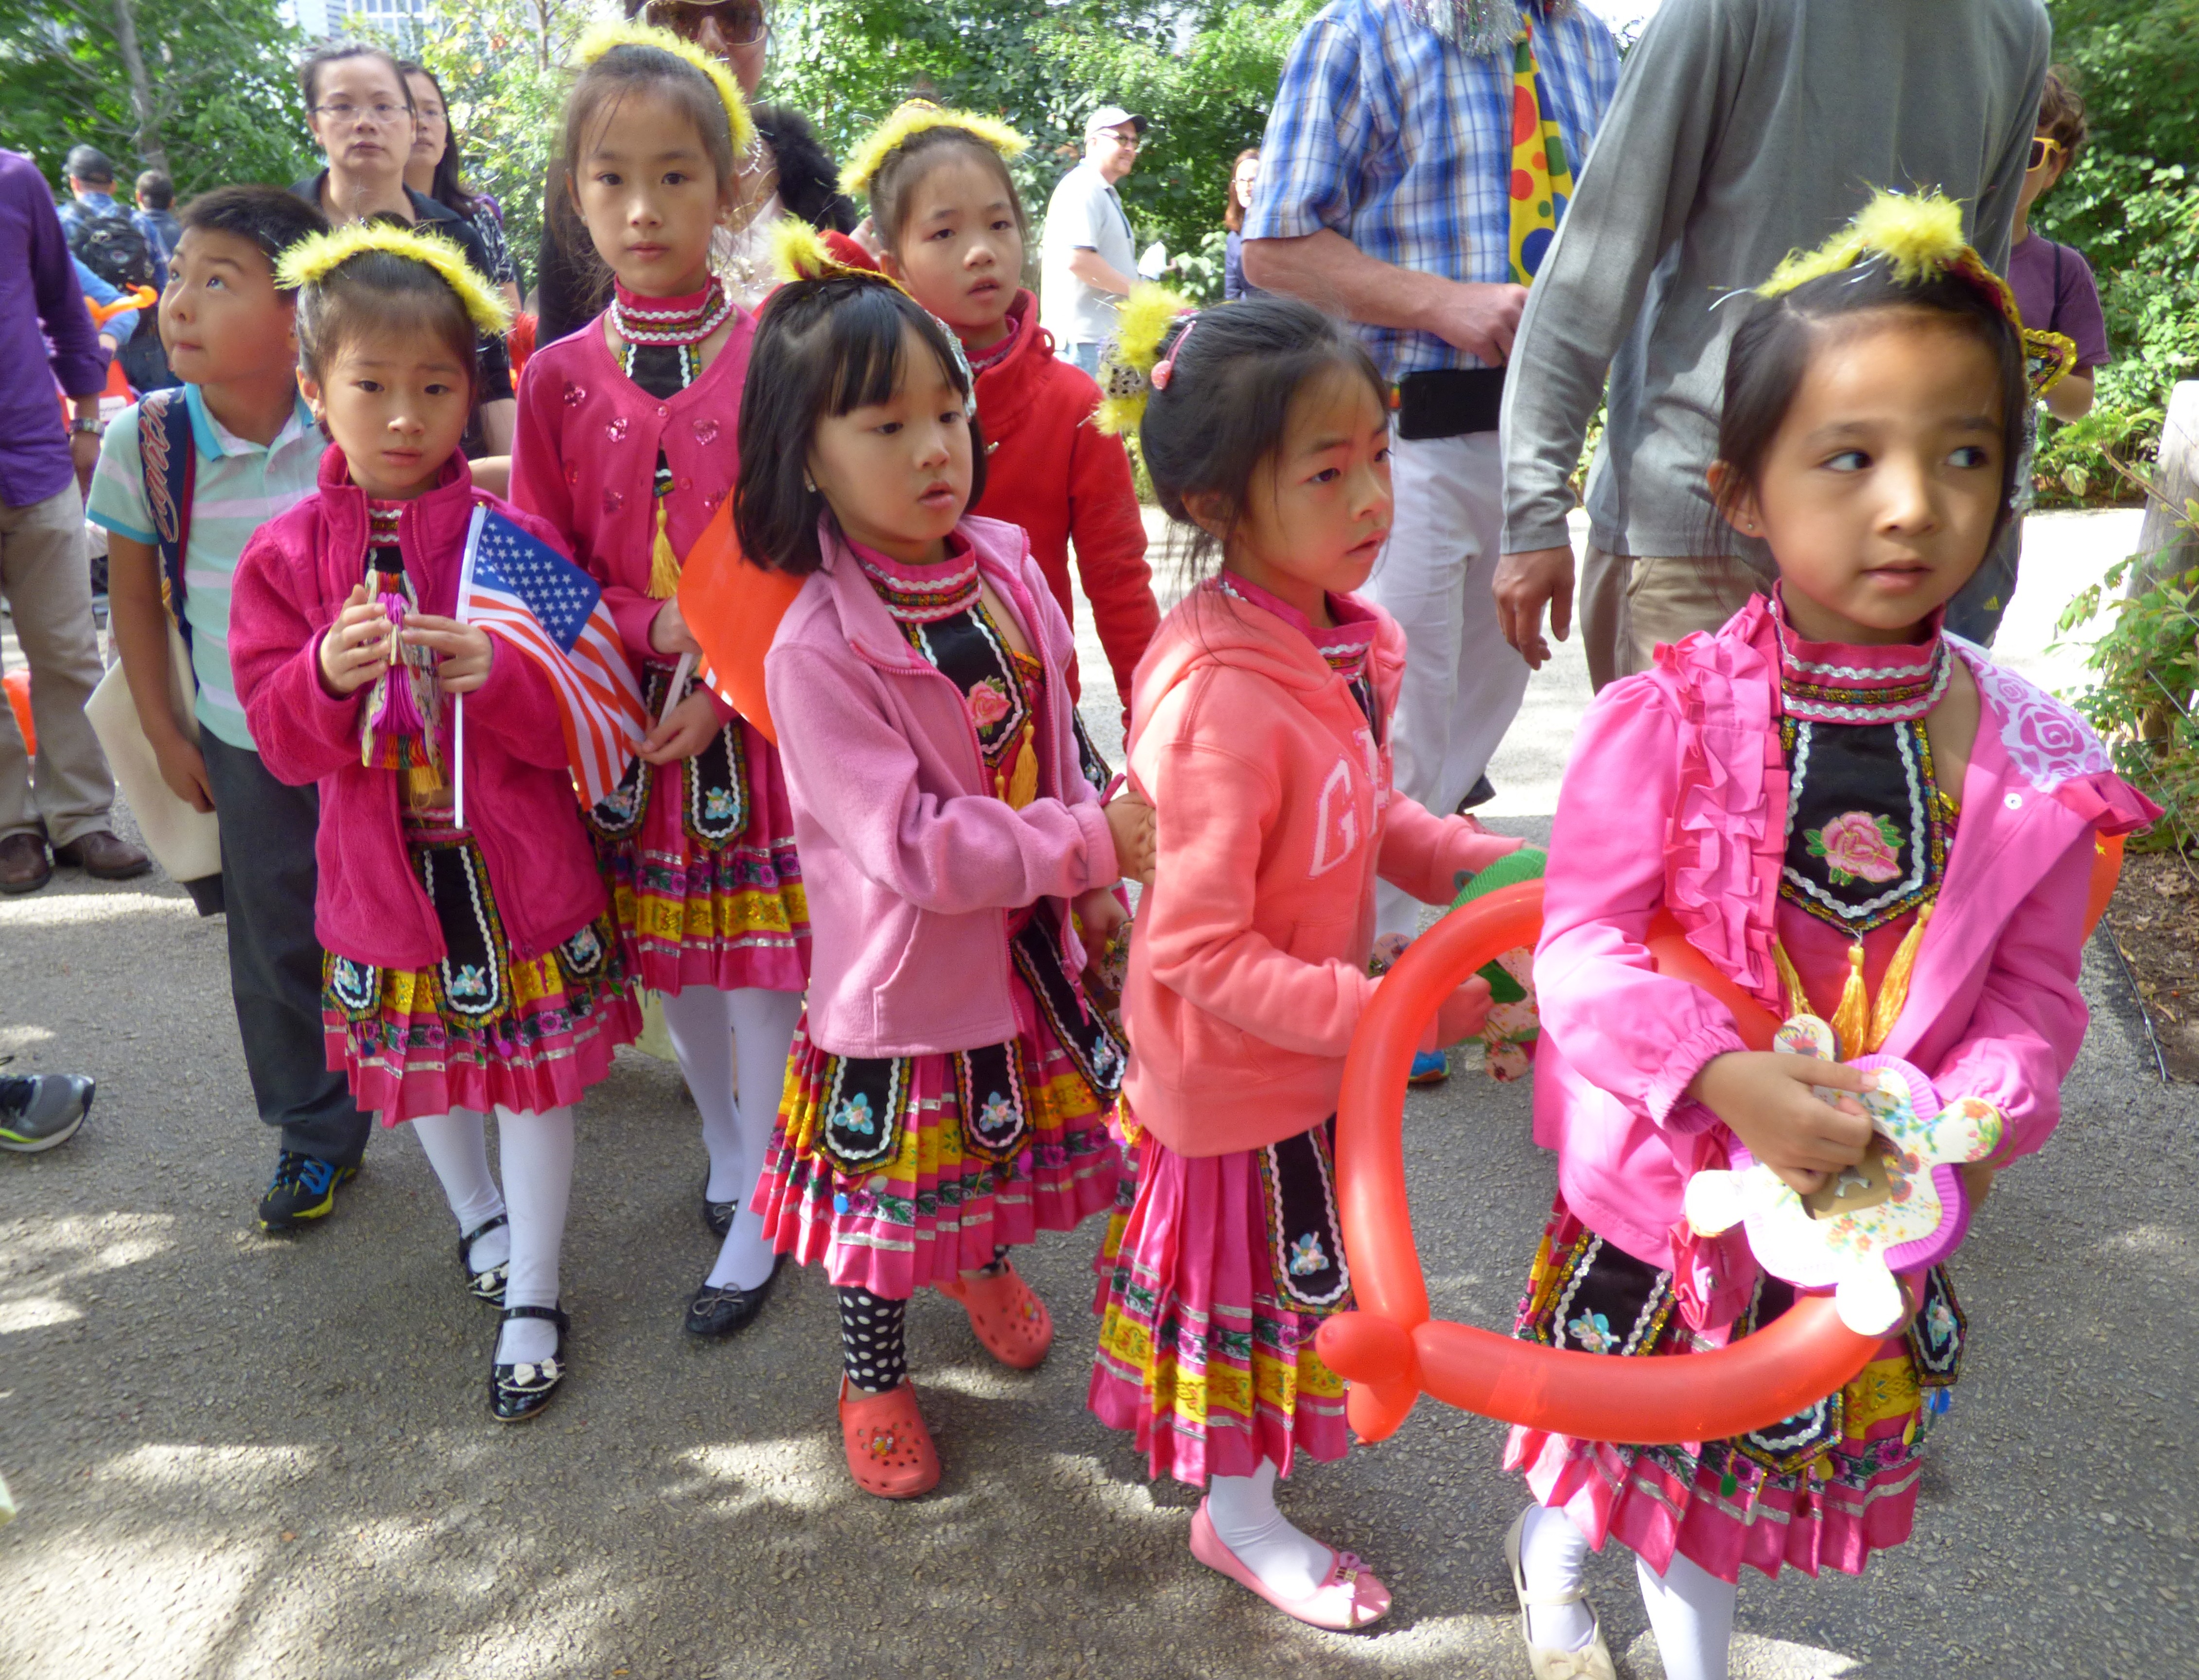 Children prance in the lantern parade.